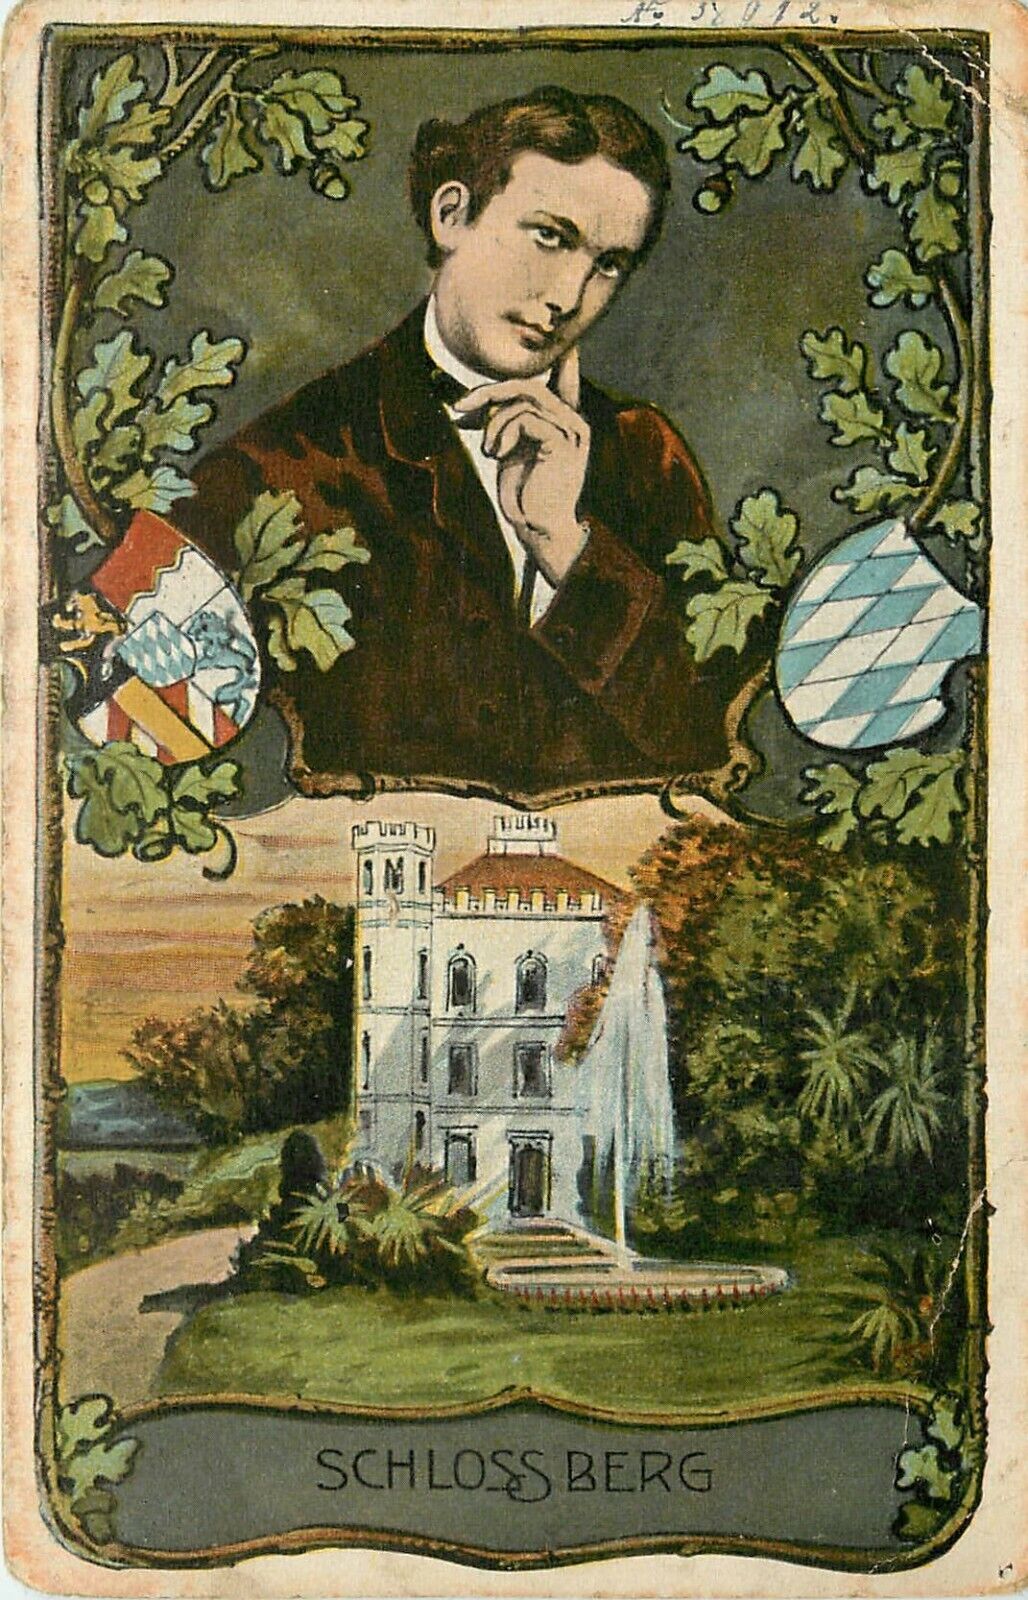 c1913 Postcard; Schlossberg Bavaria Germany & Thoughtful Man, Bayern Stamp